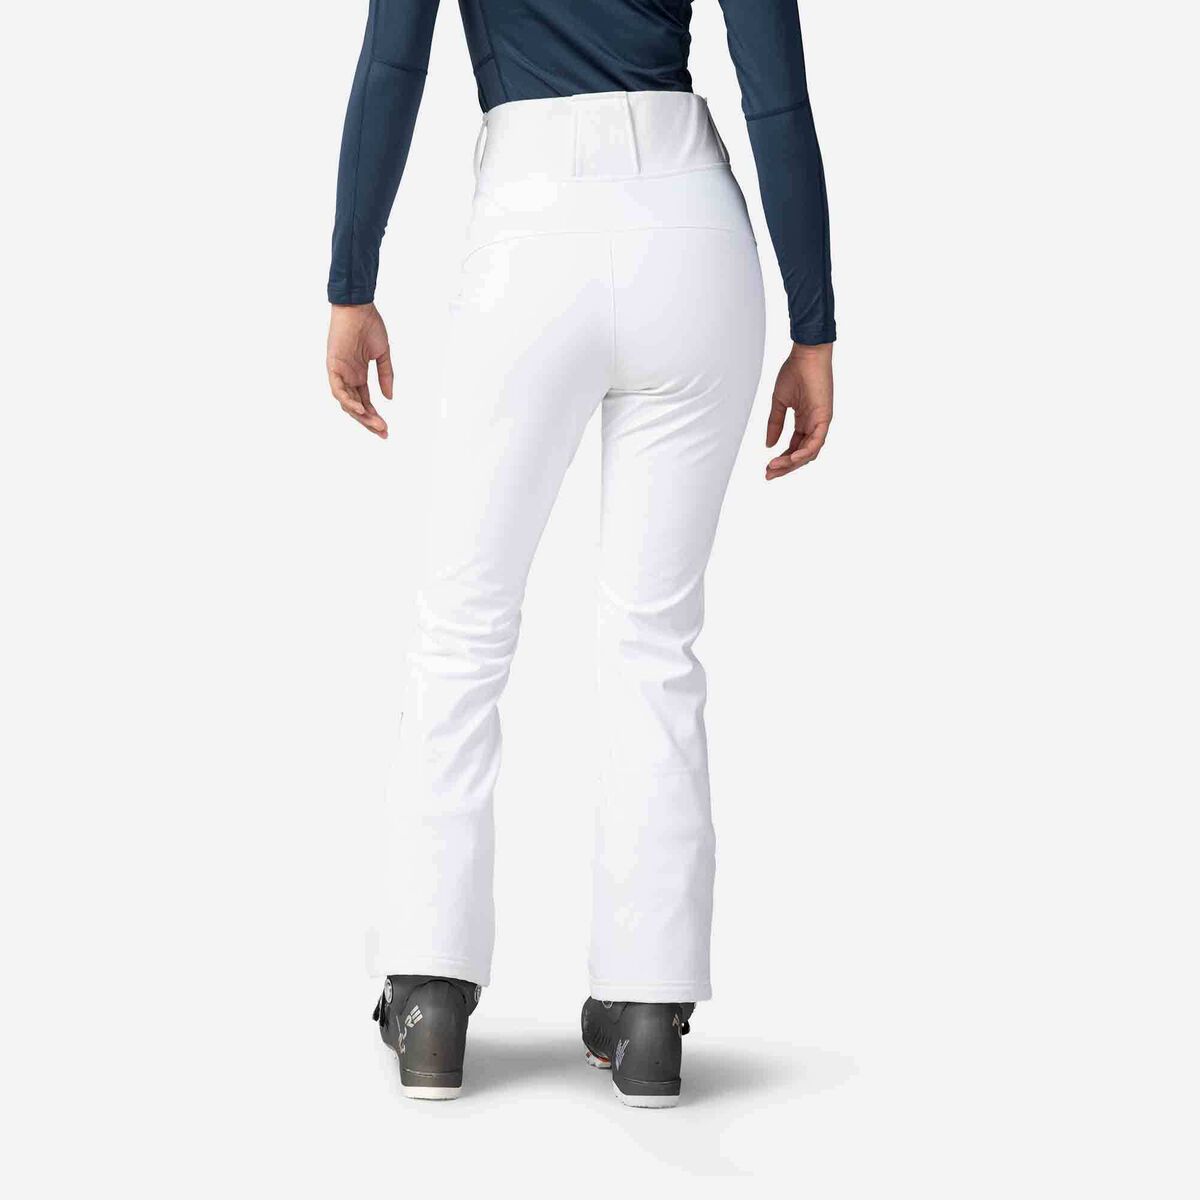 Rossignol Women's Soft Shell Ski pants, Pants Women, White